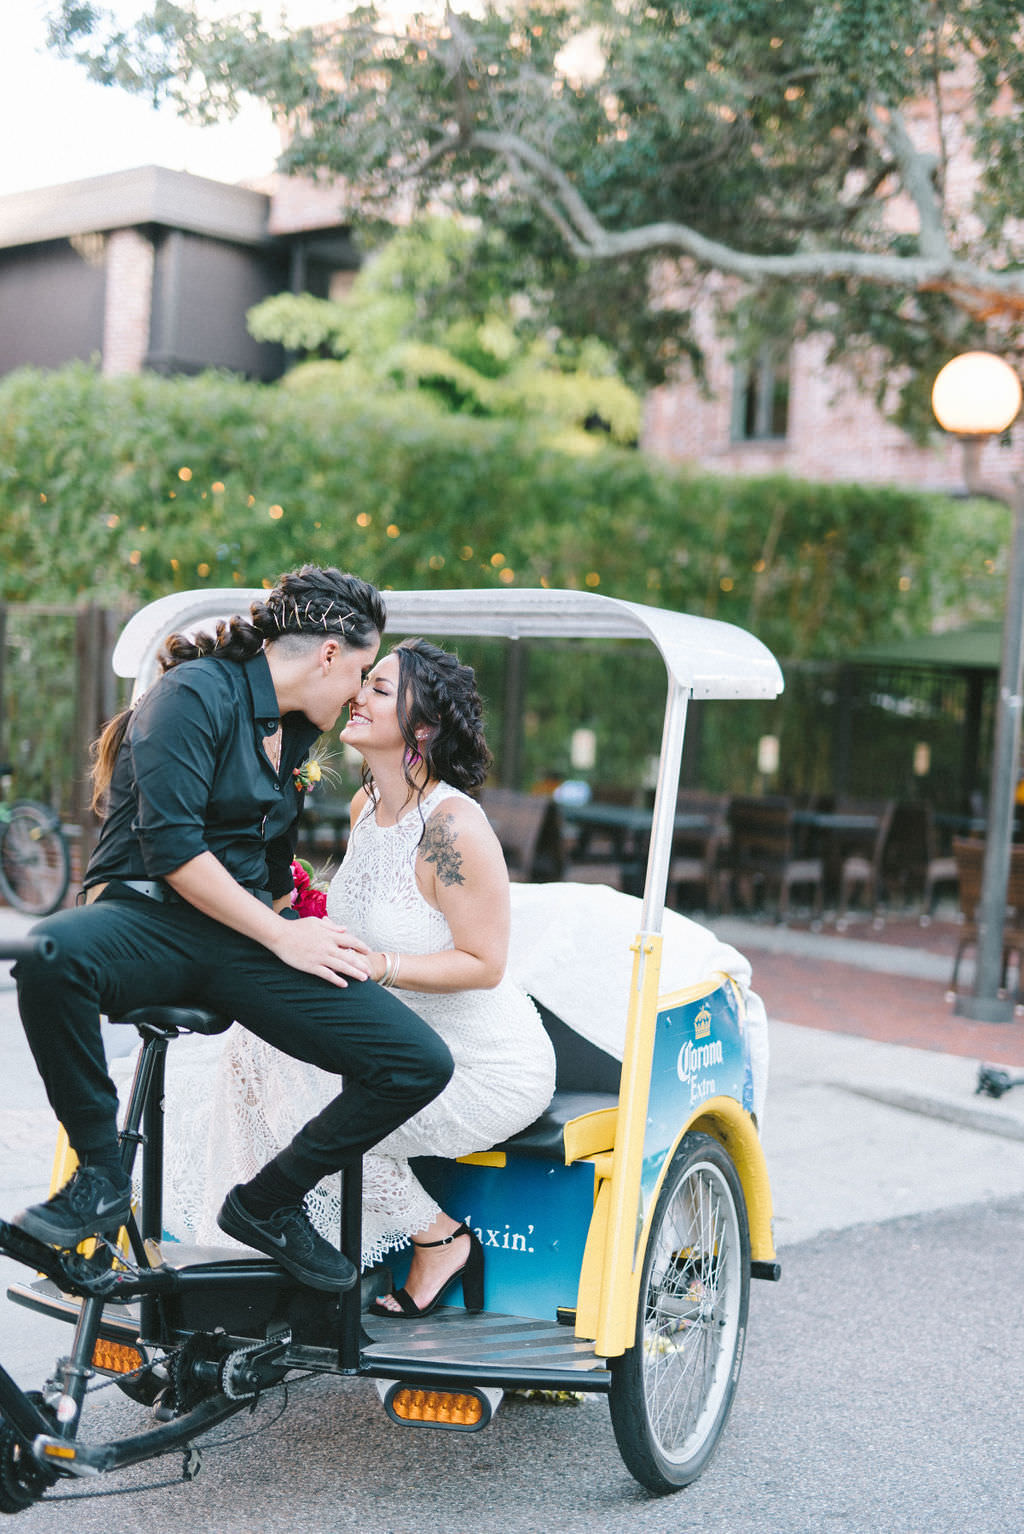 Outdoor Florida Lesbian Gay Wedding Portrait on St. Pete Pedicab | Tampa Bay Wedding Photographer Kera Photography